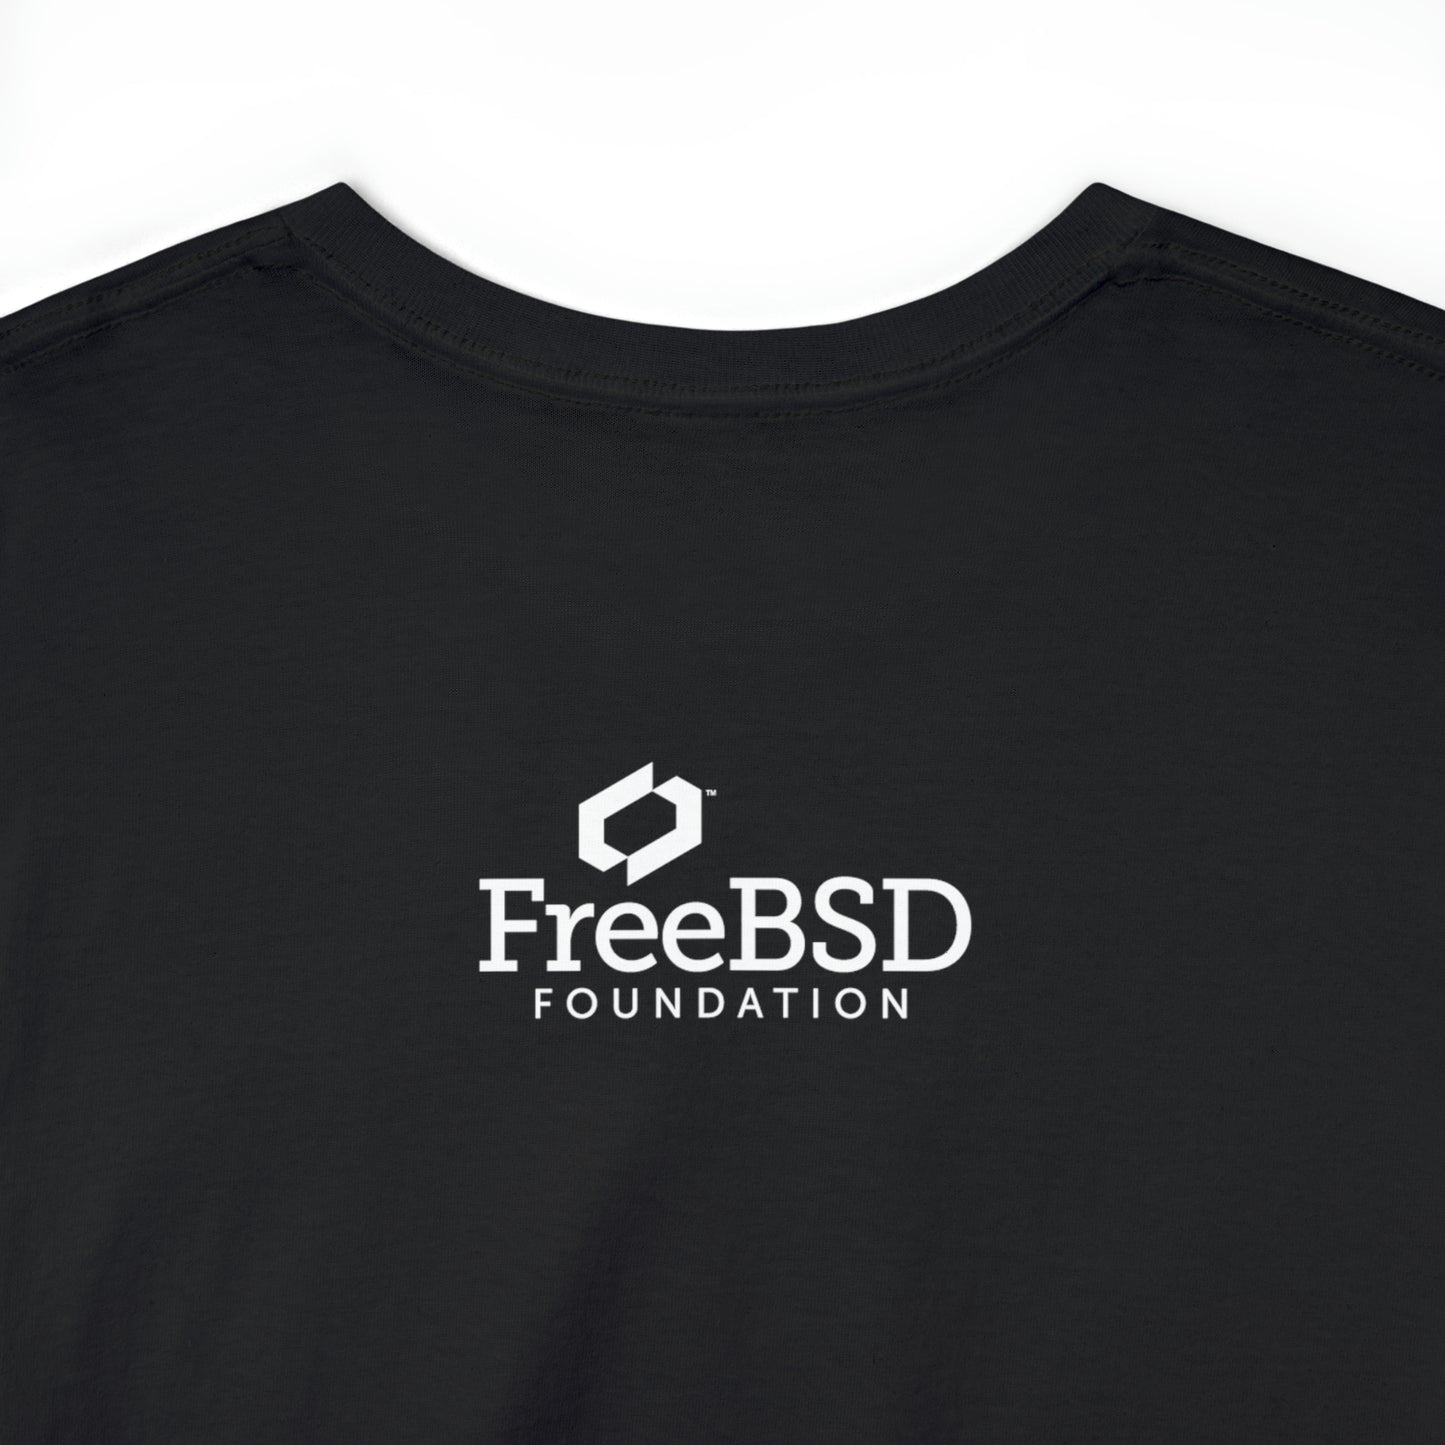 FreeBSD 30th Anniversary T-Shirt